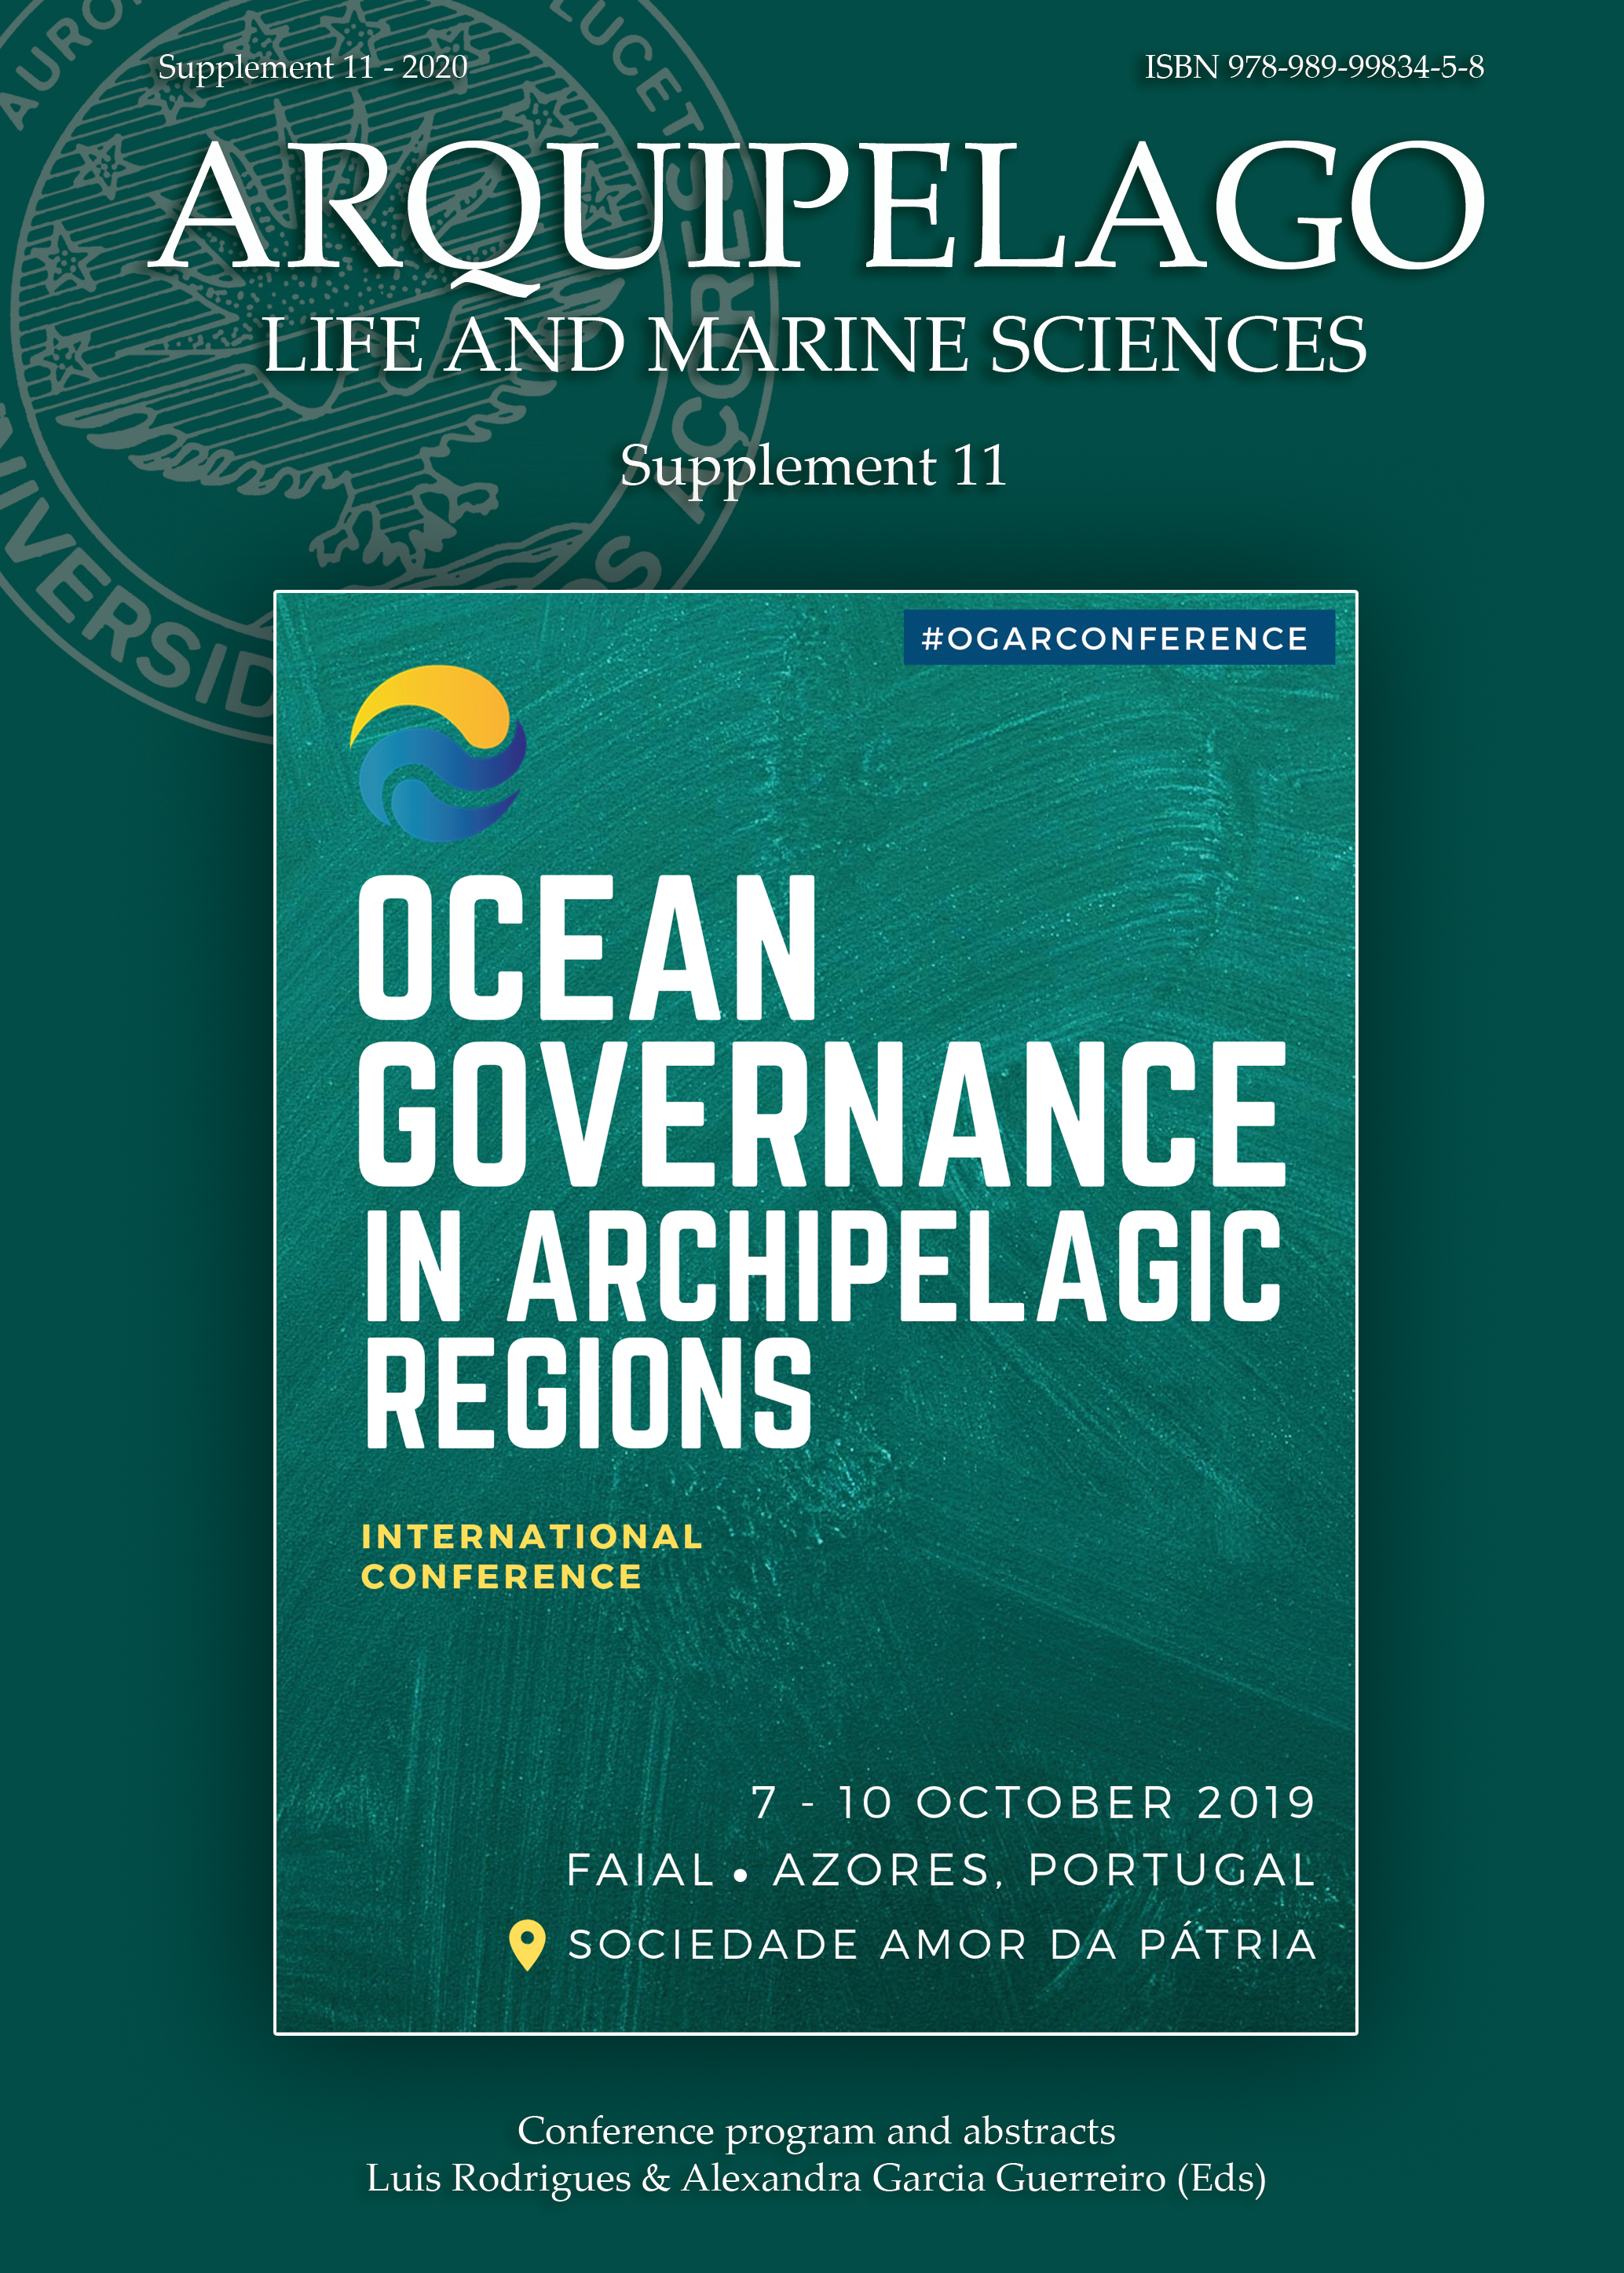 					Ver 2020: Suplemento 11 - Ocean Governance in Archipelagic Regions - International Conference
				